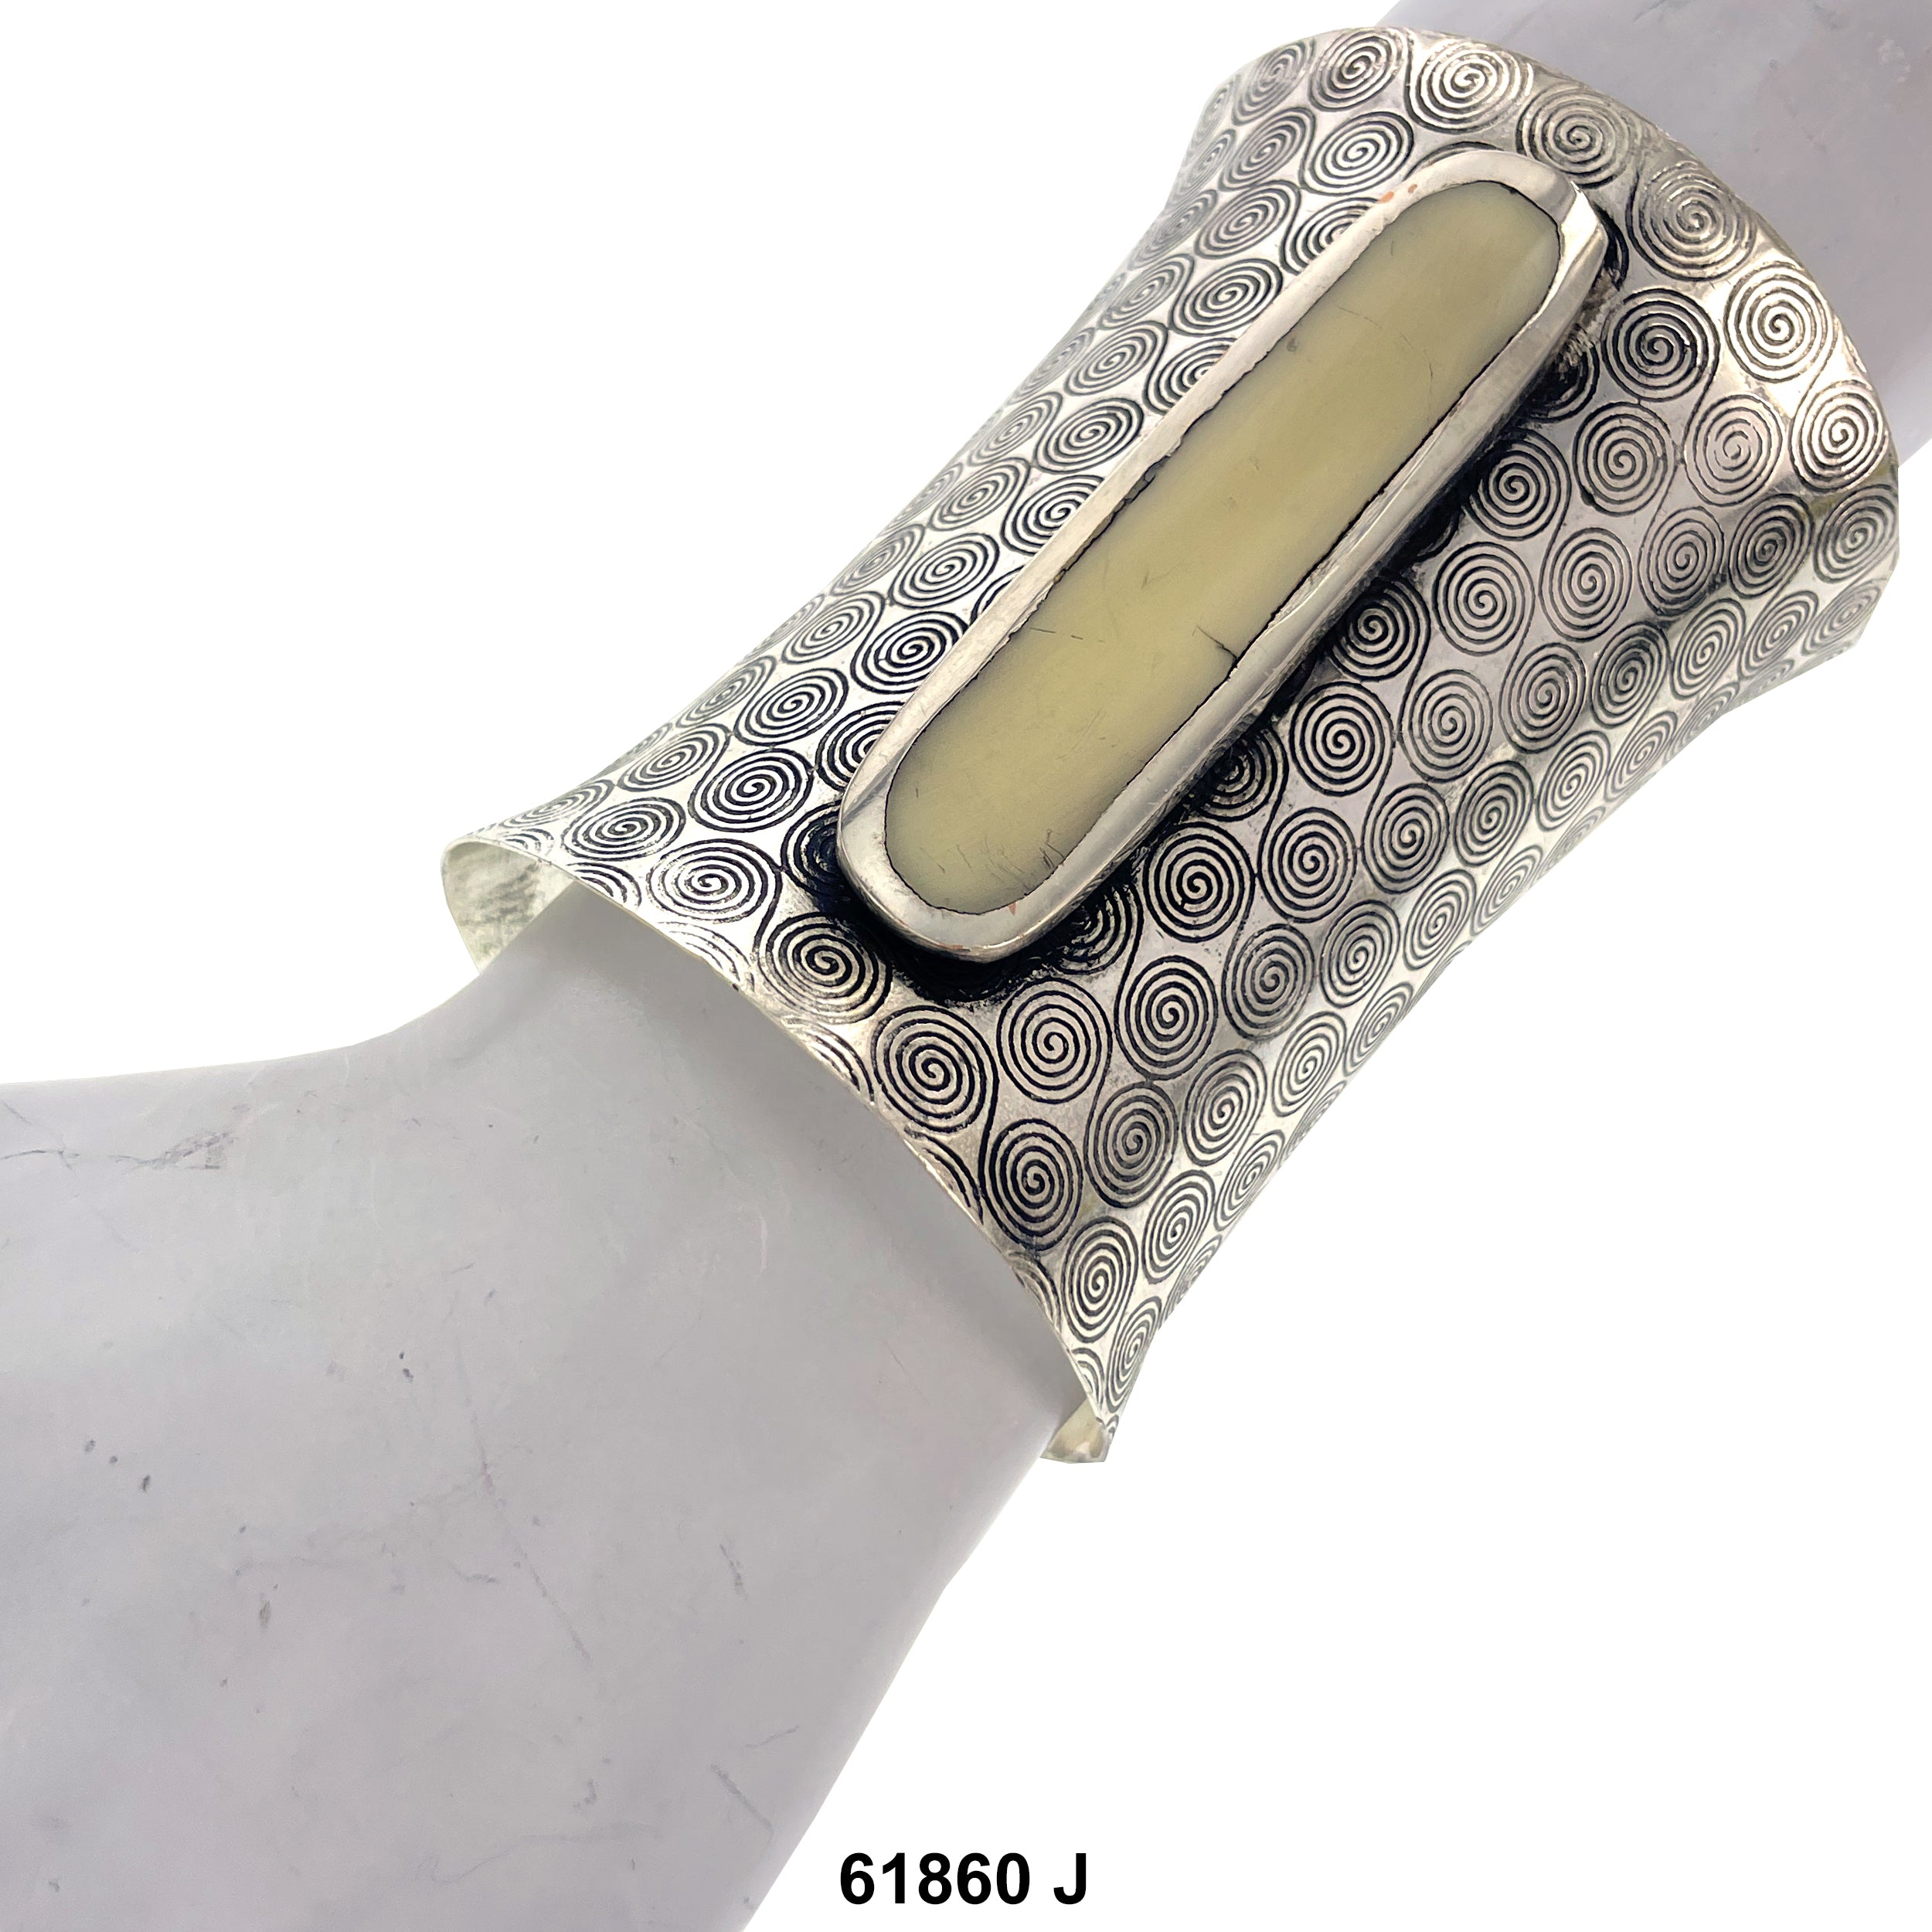 Cuff Bangle Bracelet 61860 J